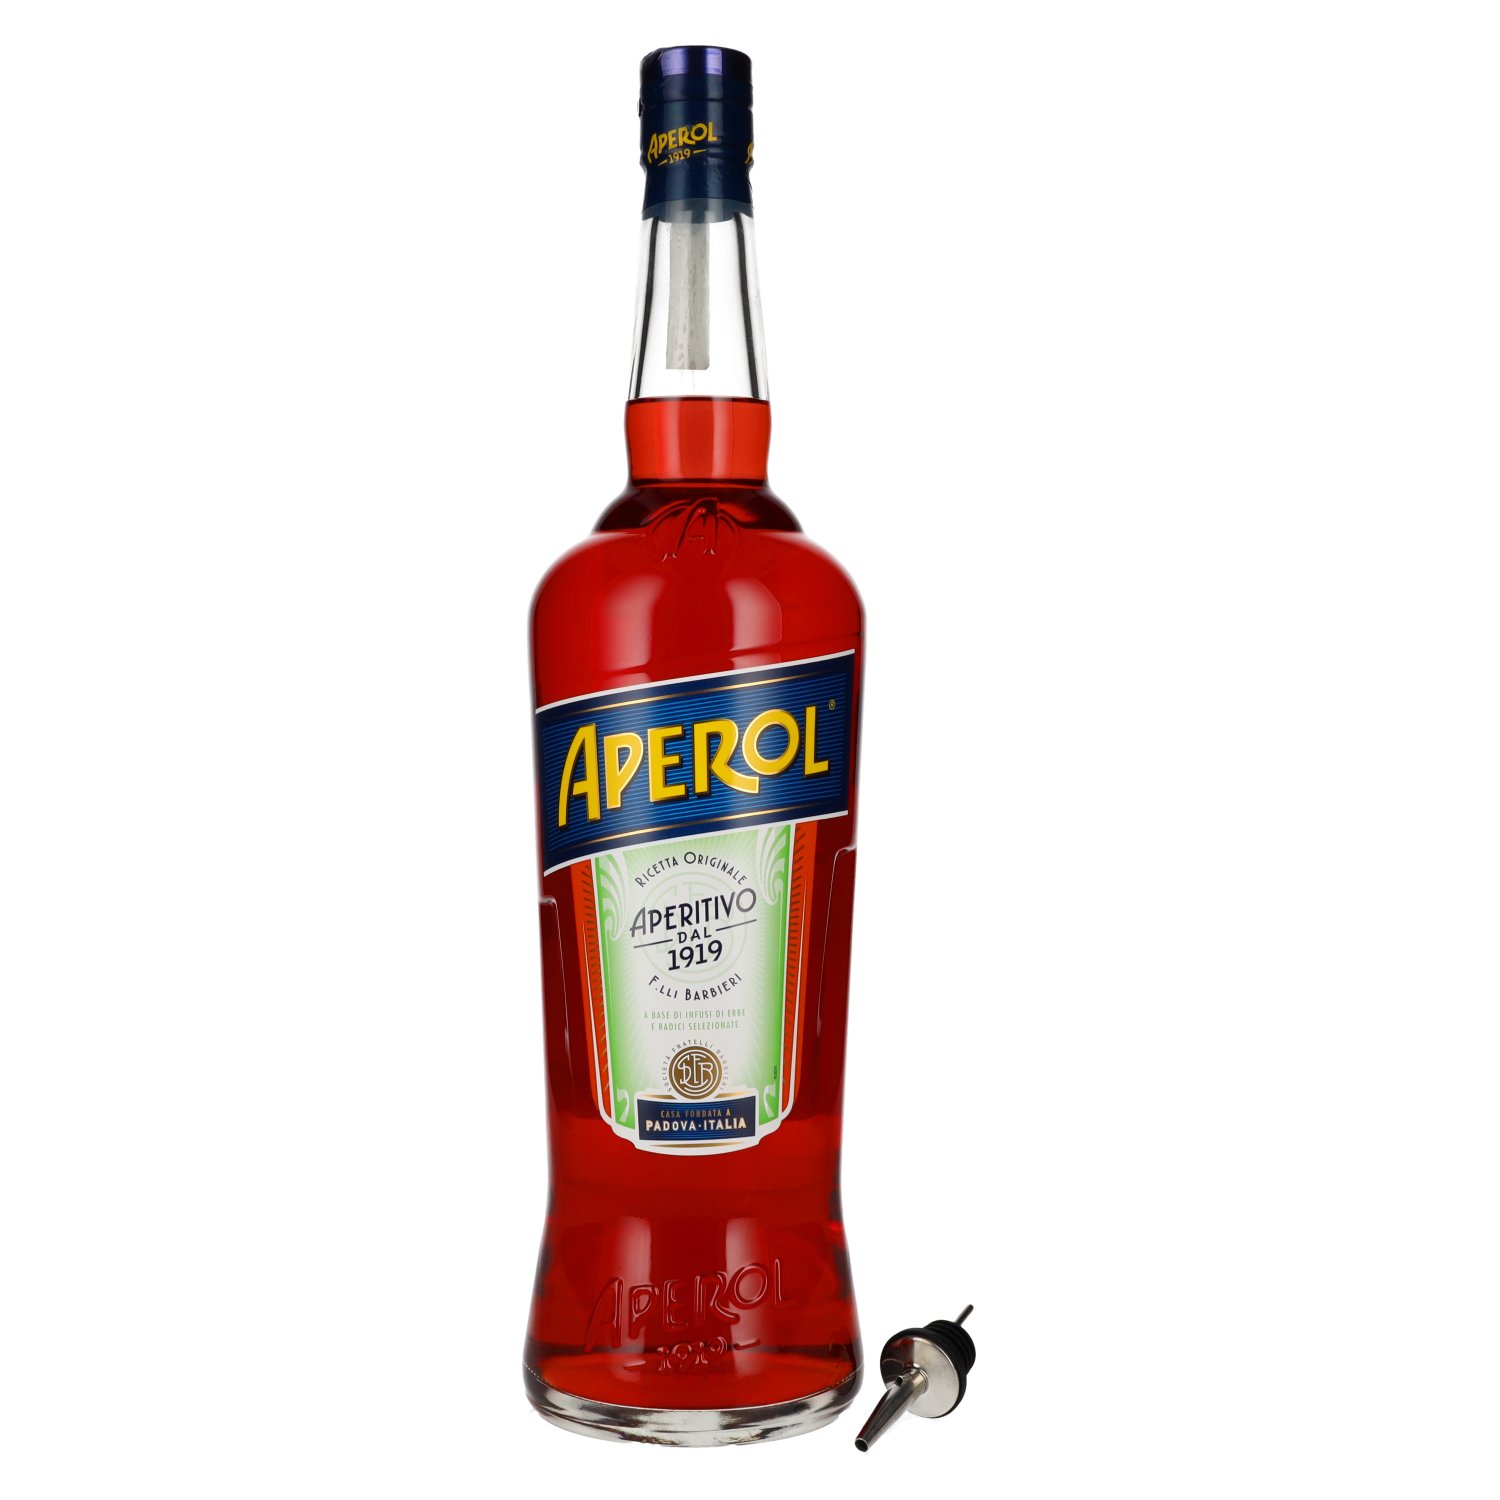 Aperol Aperitivo 11% Vol. 3l with bottle pourer